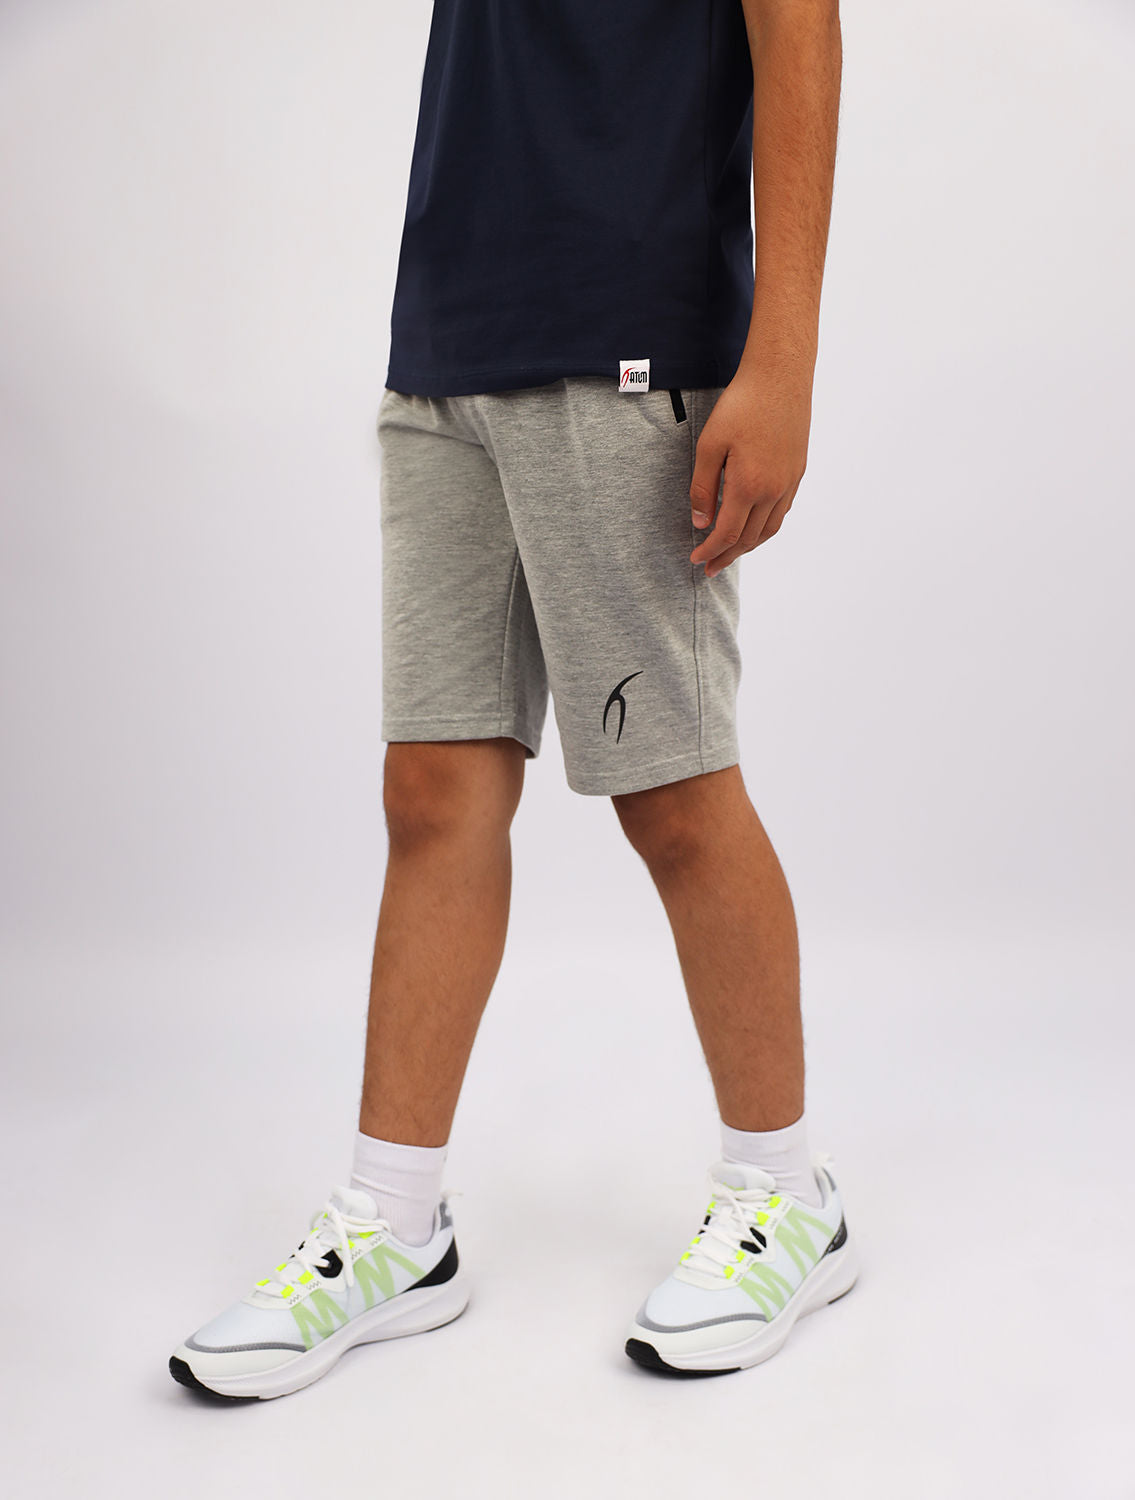 Atum Boy's Ultimate Shorts